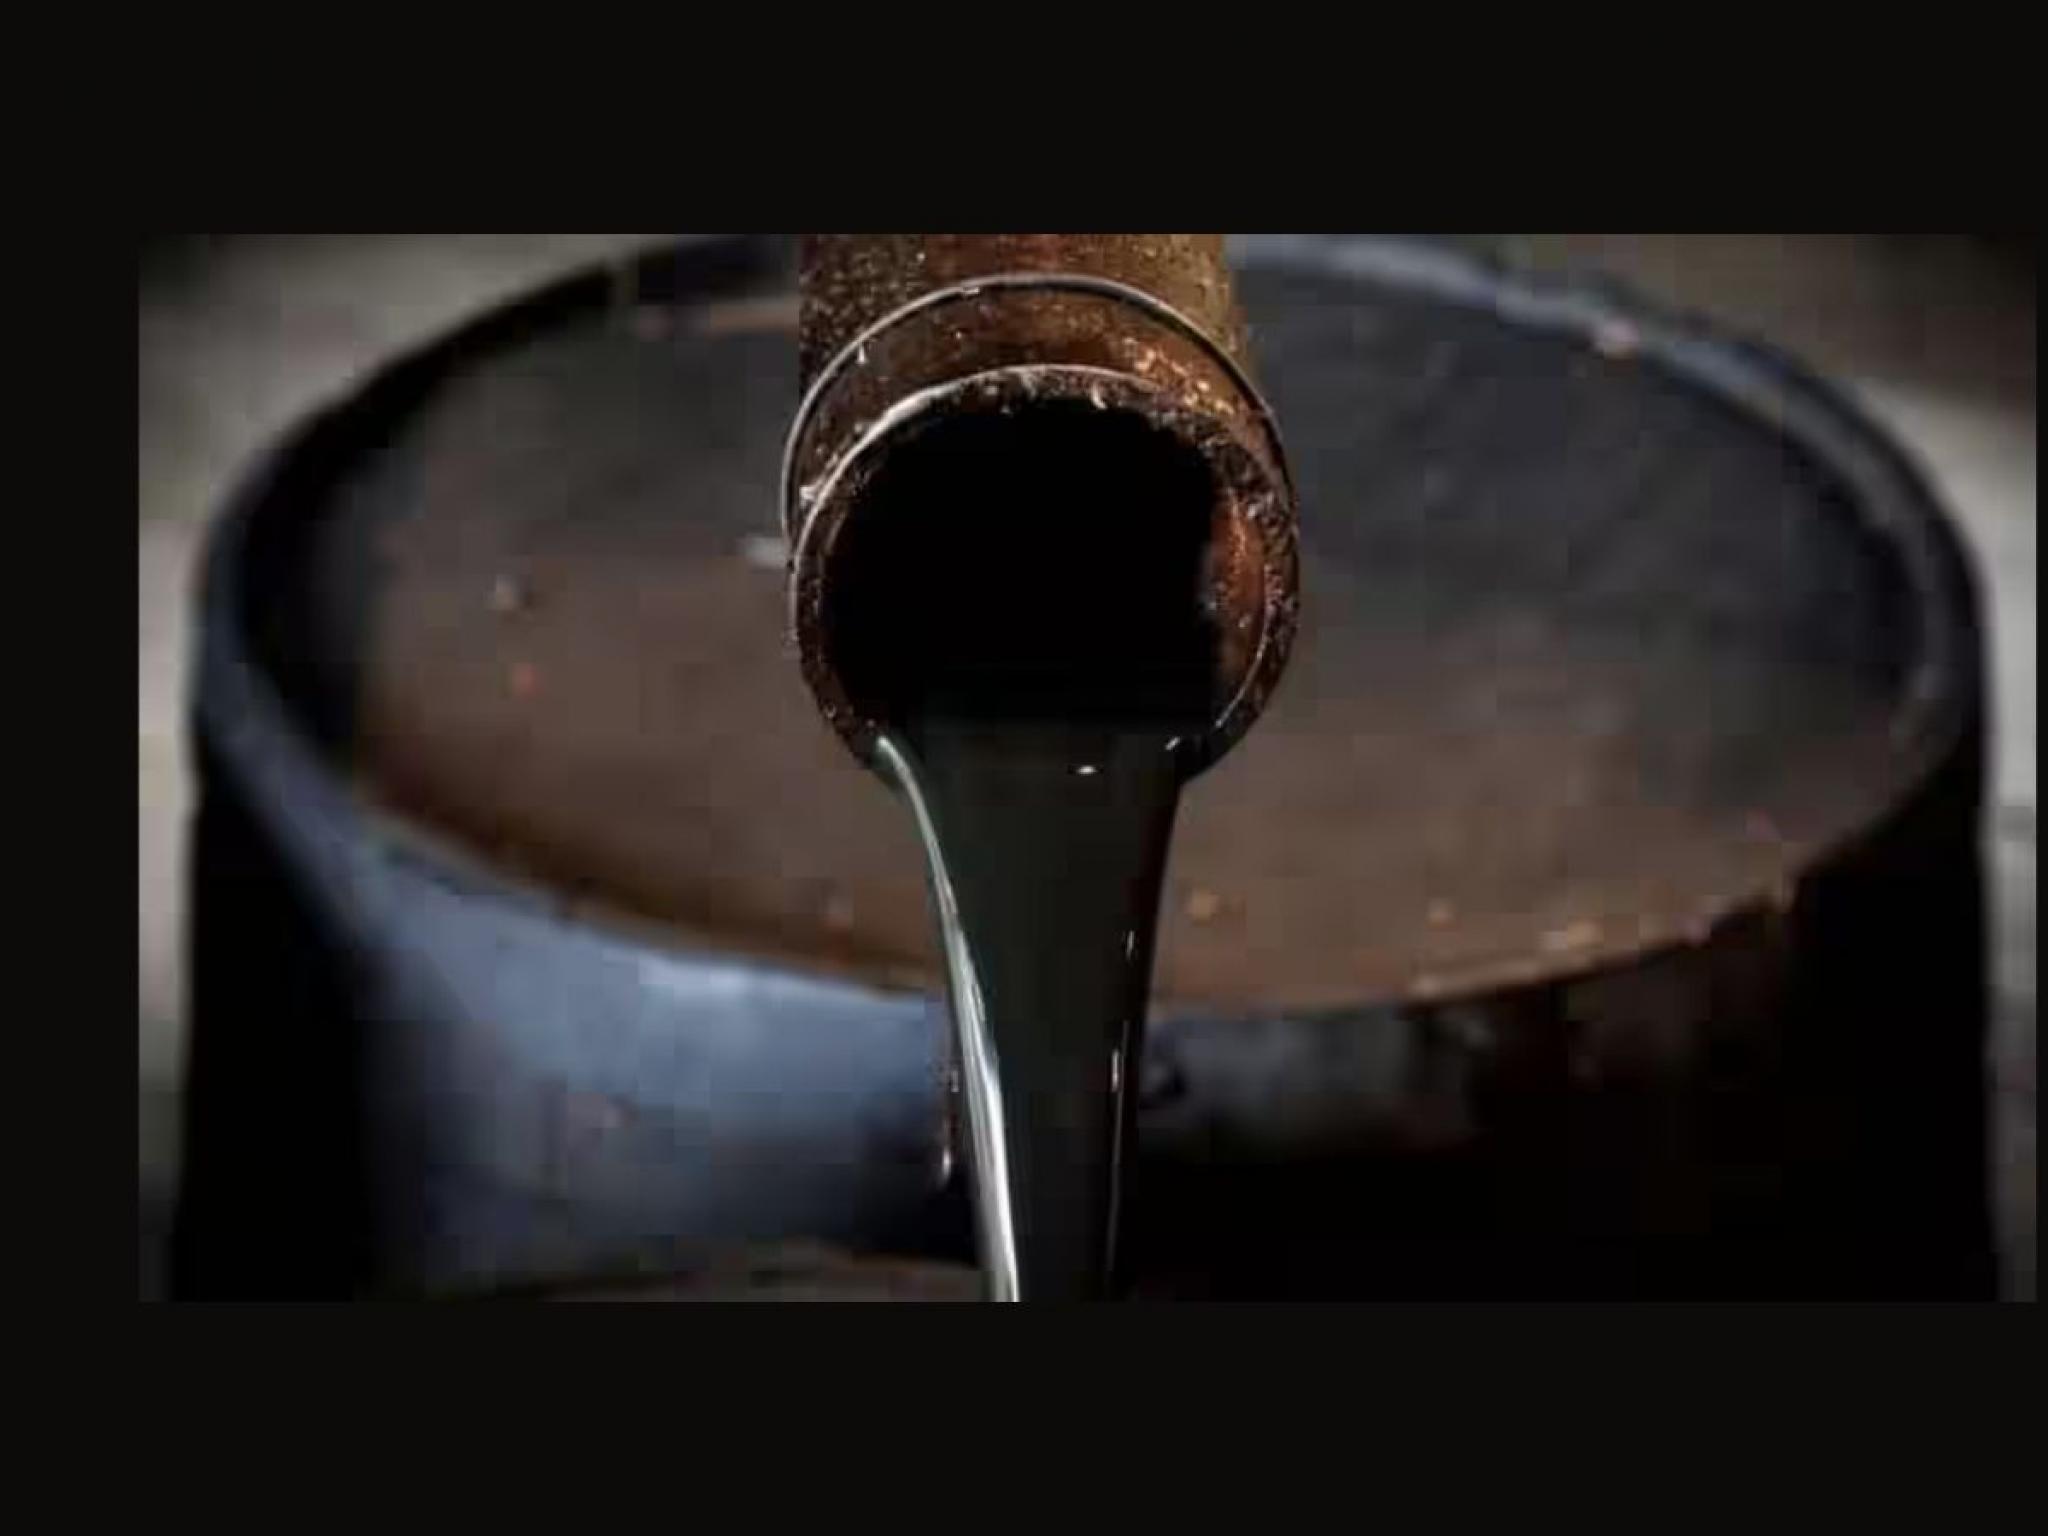  crude-oil-down-1-lockheed-martin-earnings-top-views 